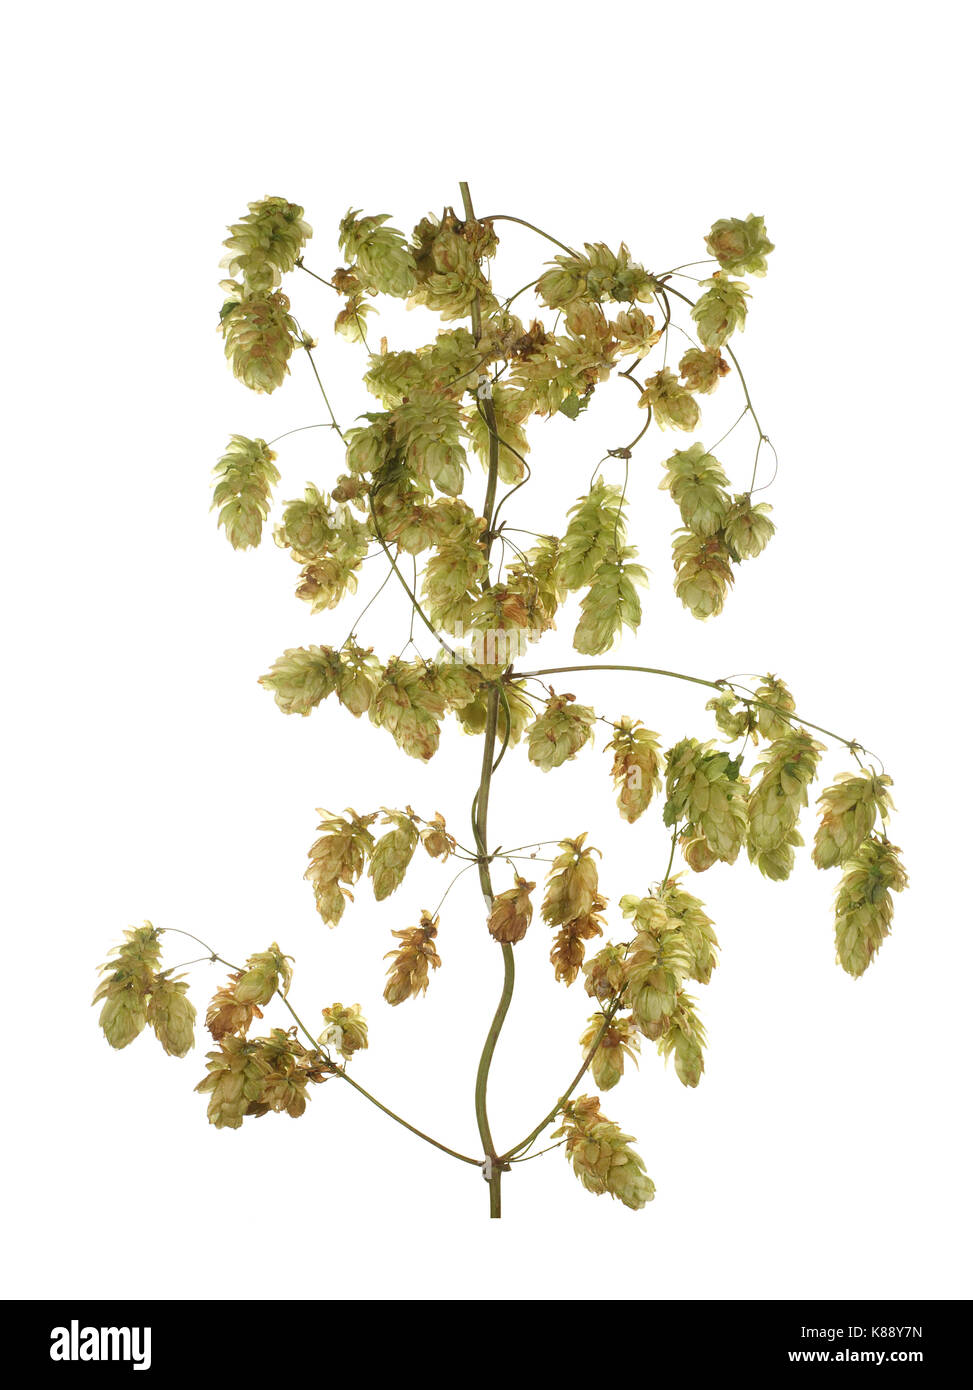 Hops plant twined vine isolated on white background. Stock Photo